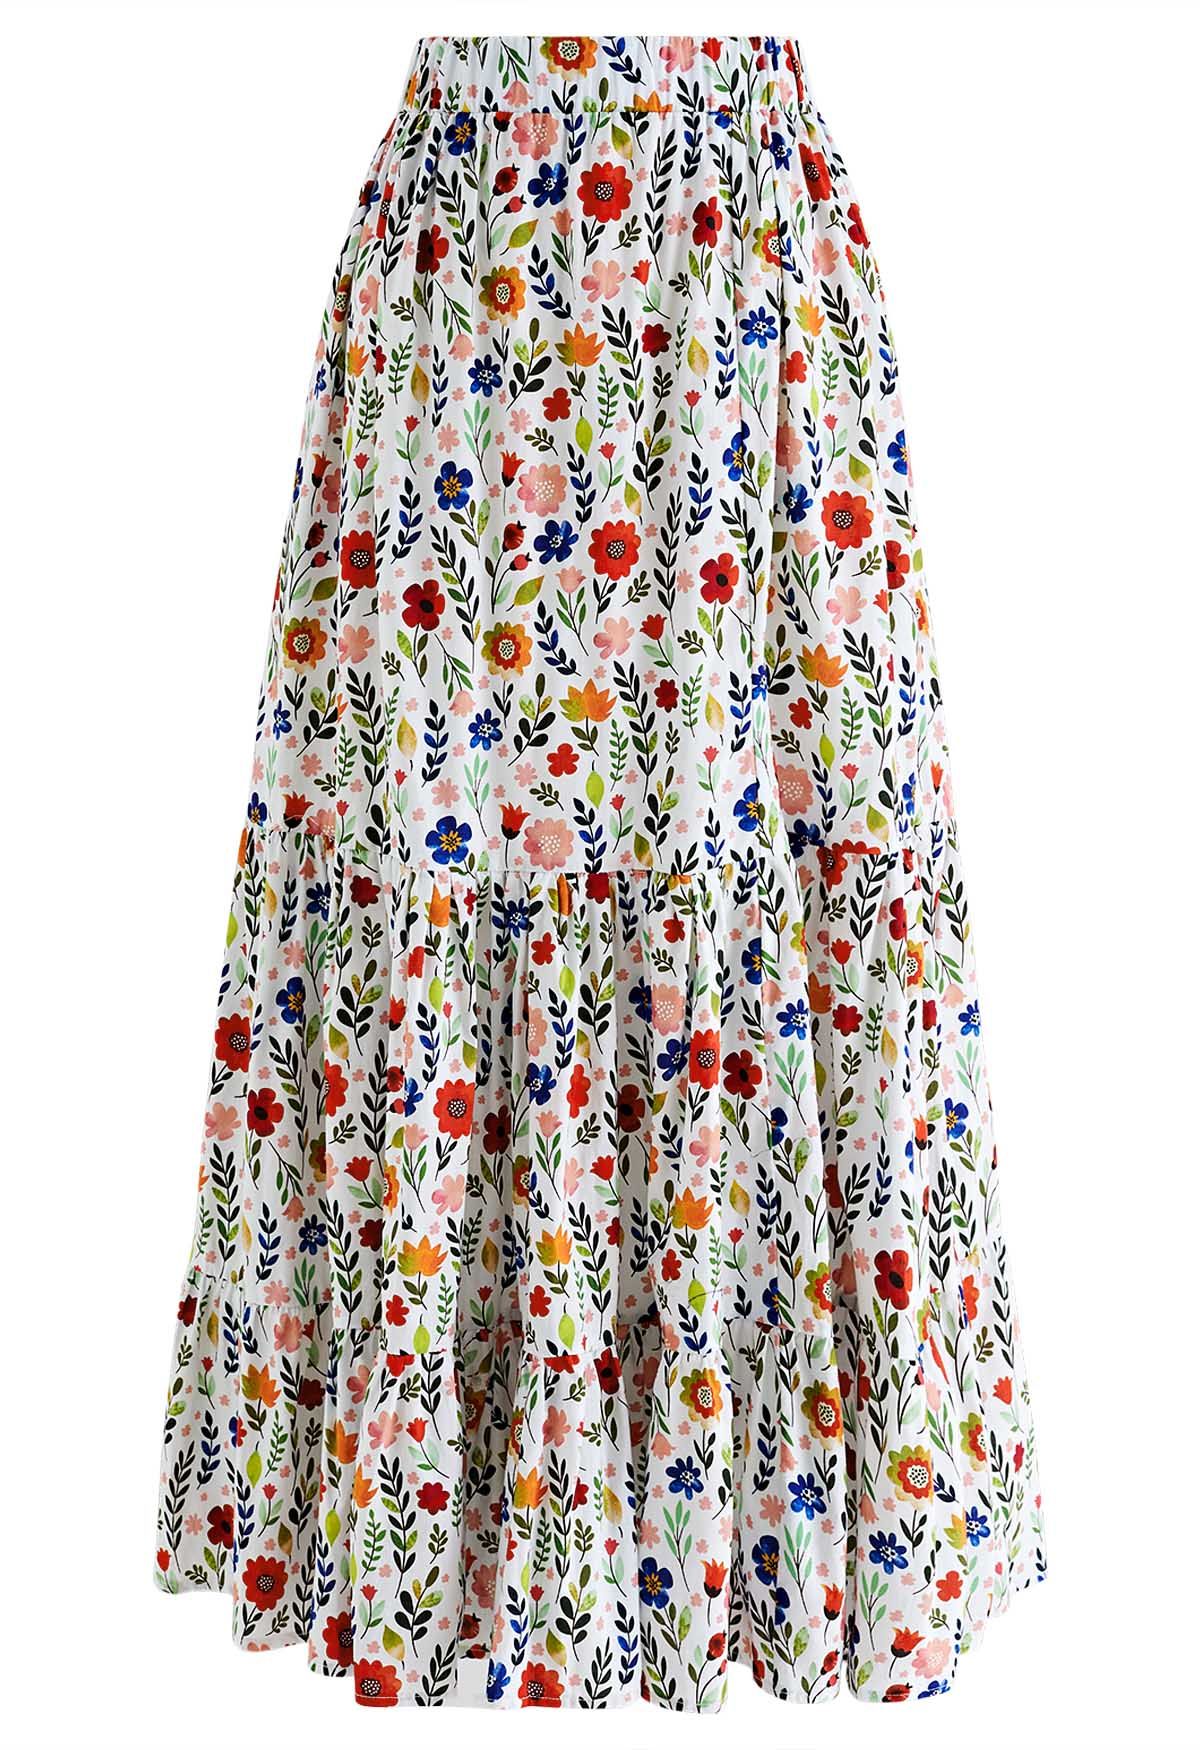 Off-Shoulder Bowknot Crop Top and Flare Skirt Set in Floret Print